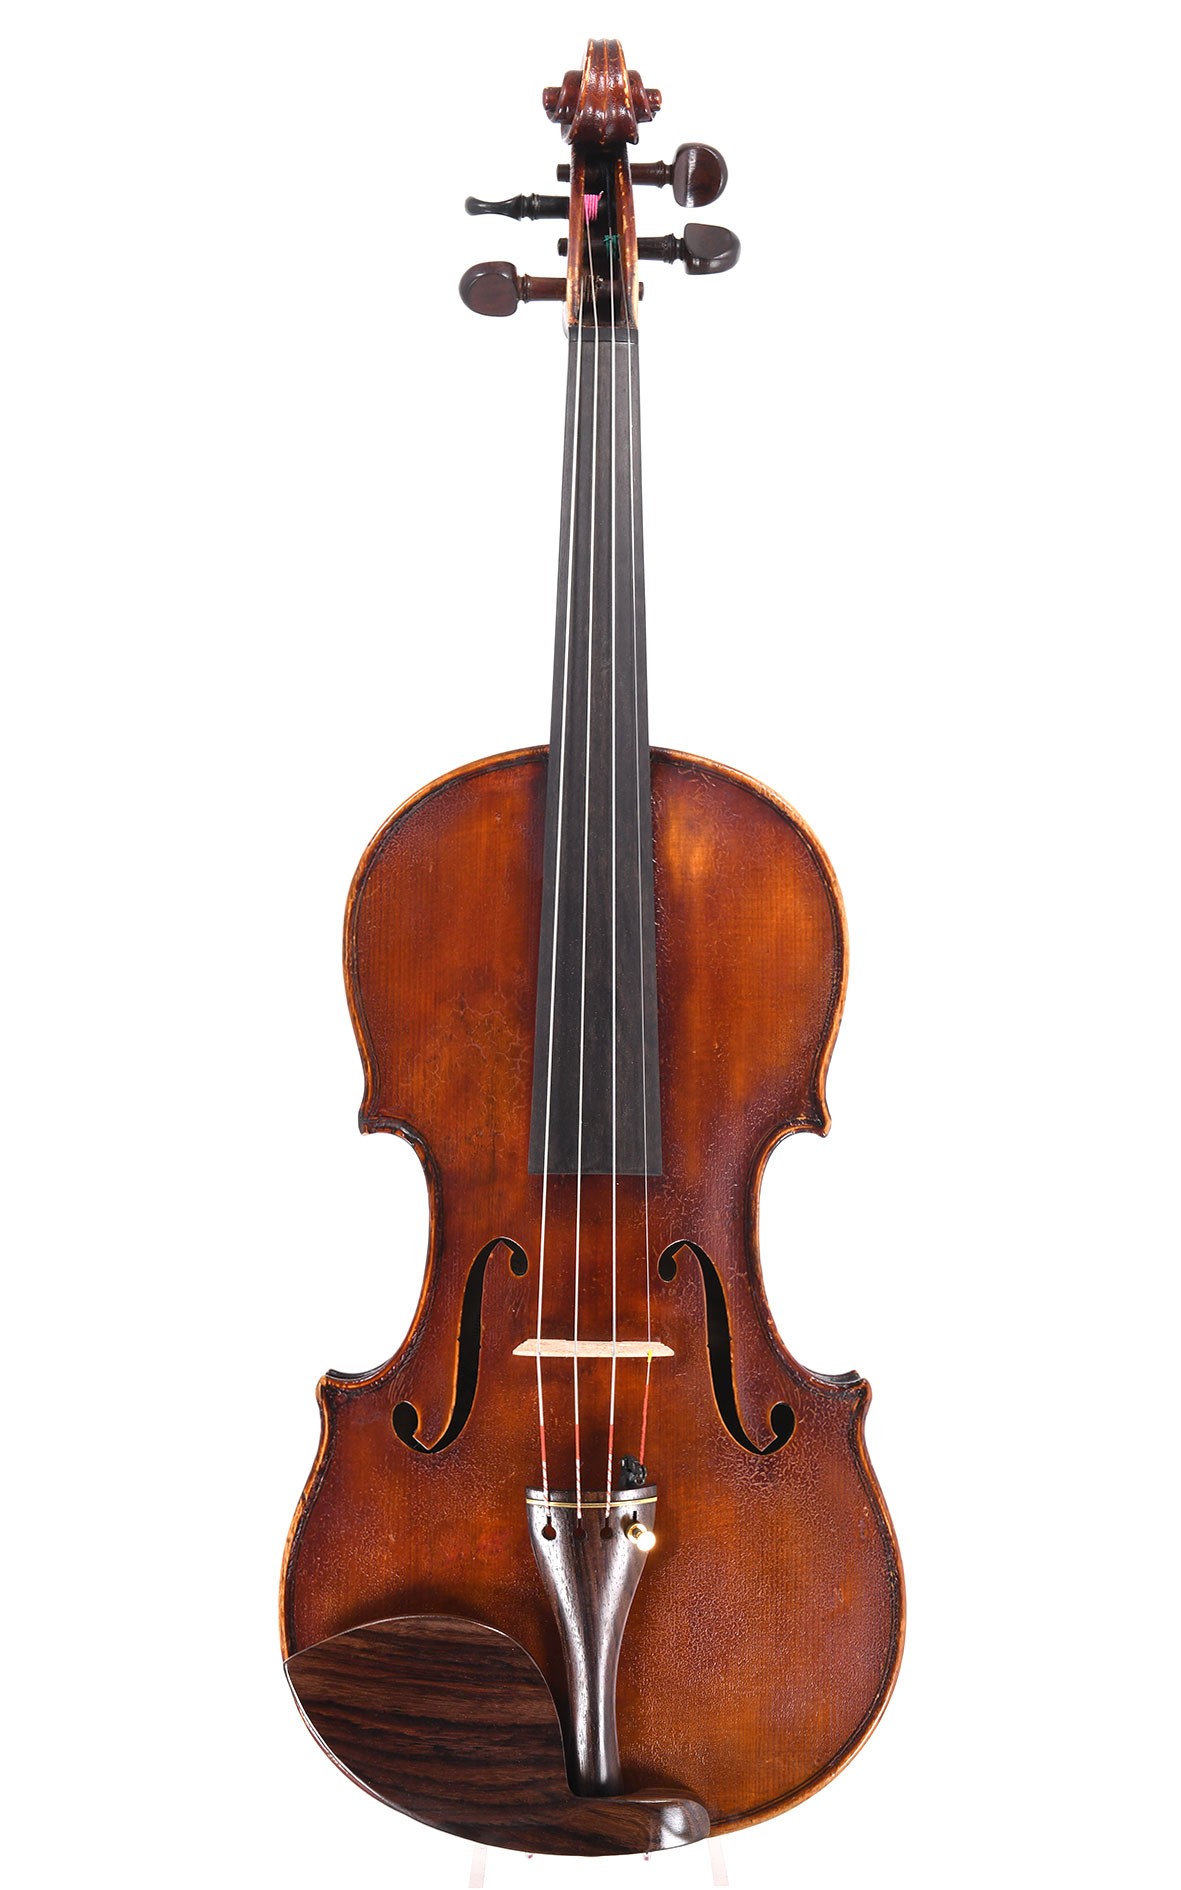 Interesting old English violin, labeled Luigi Salsedo 1932